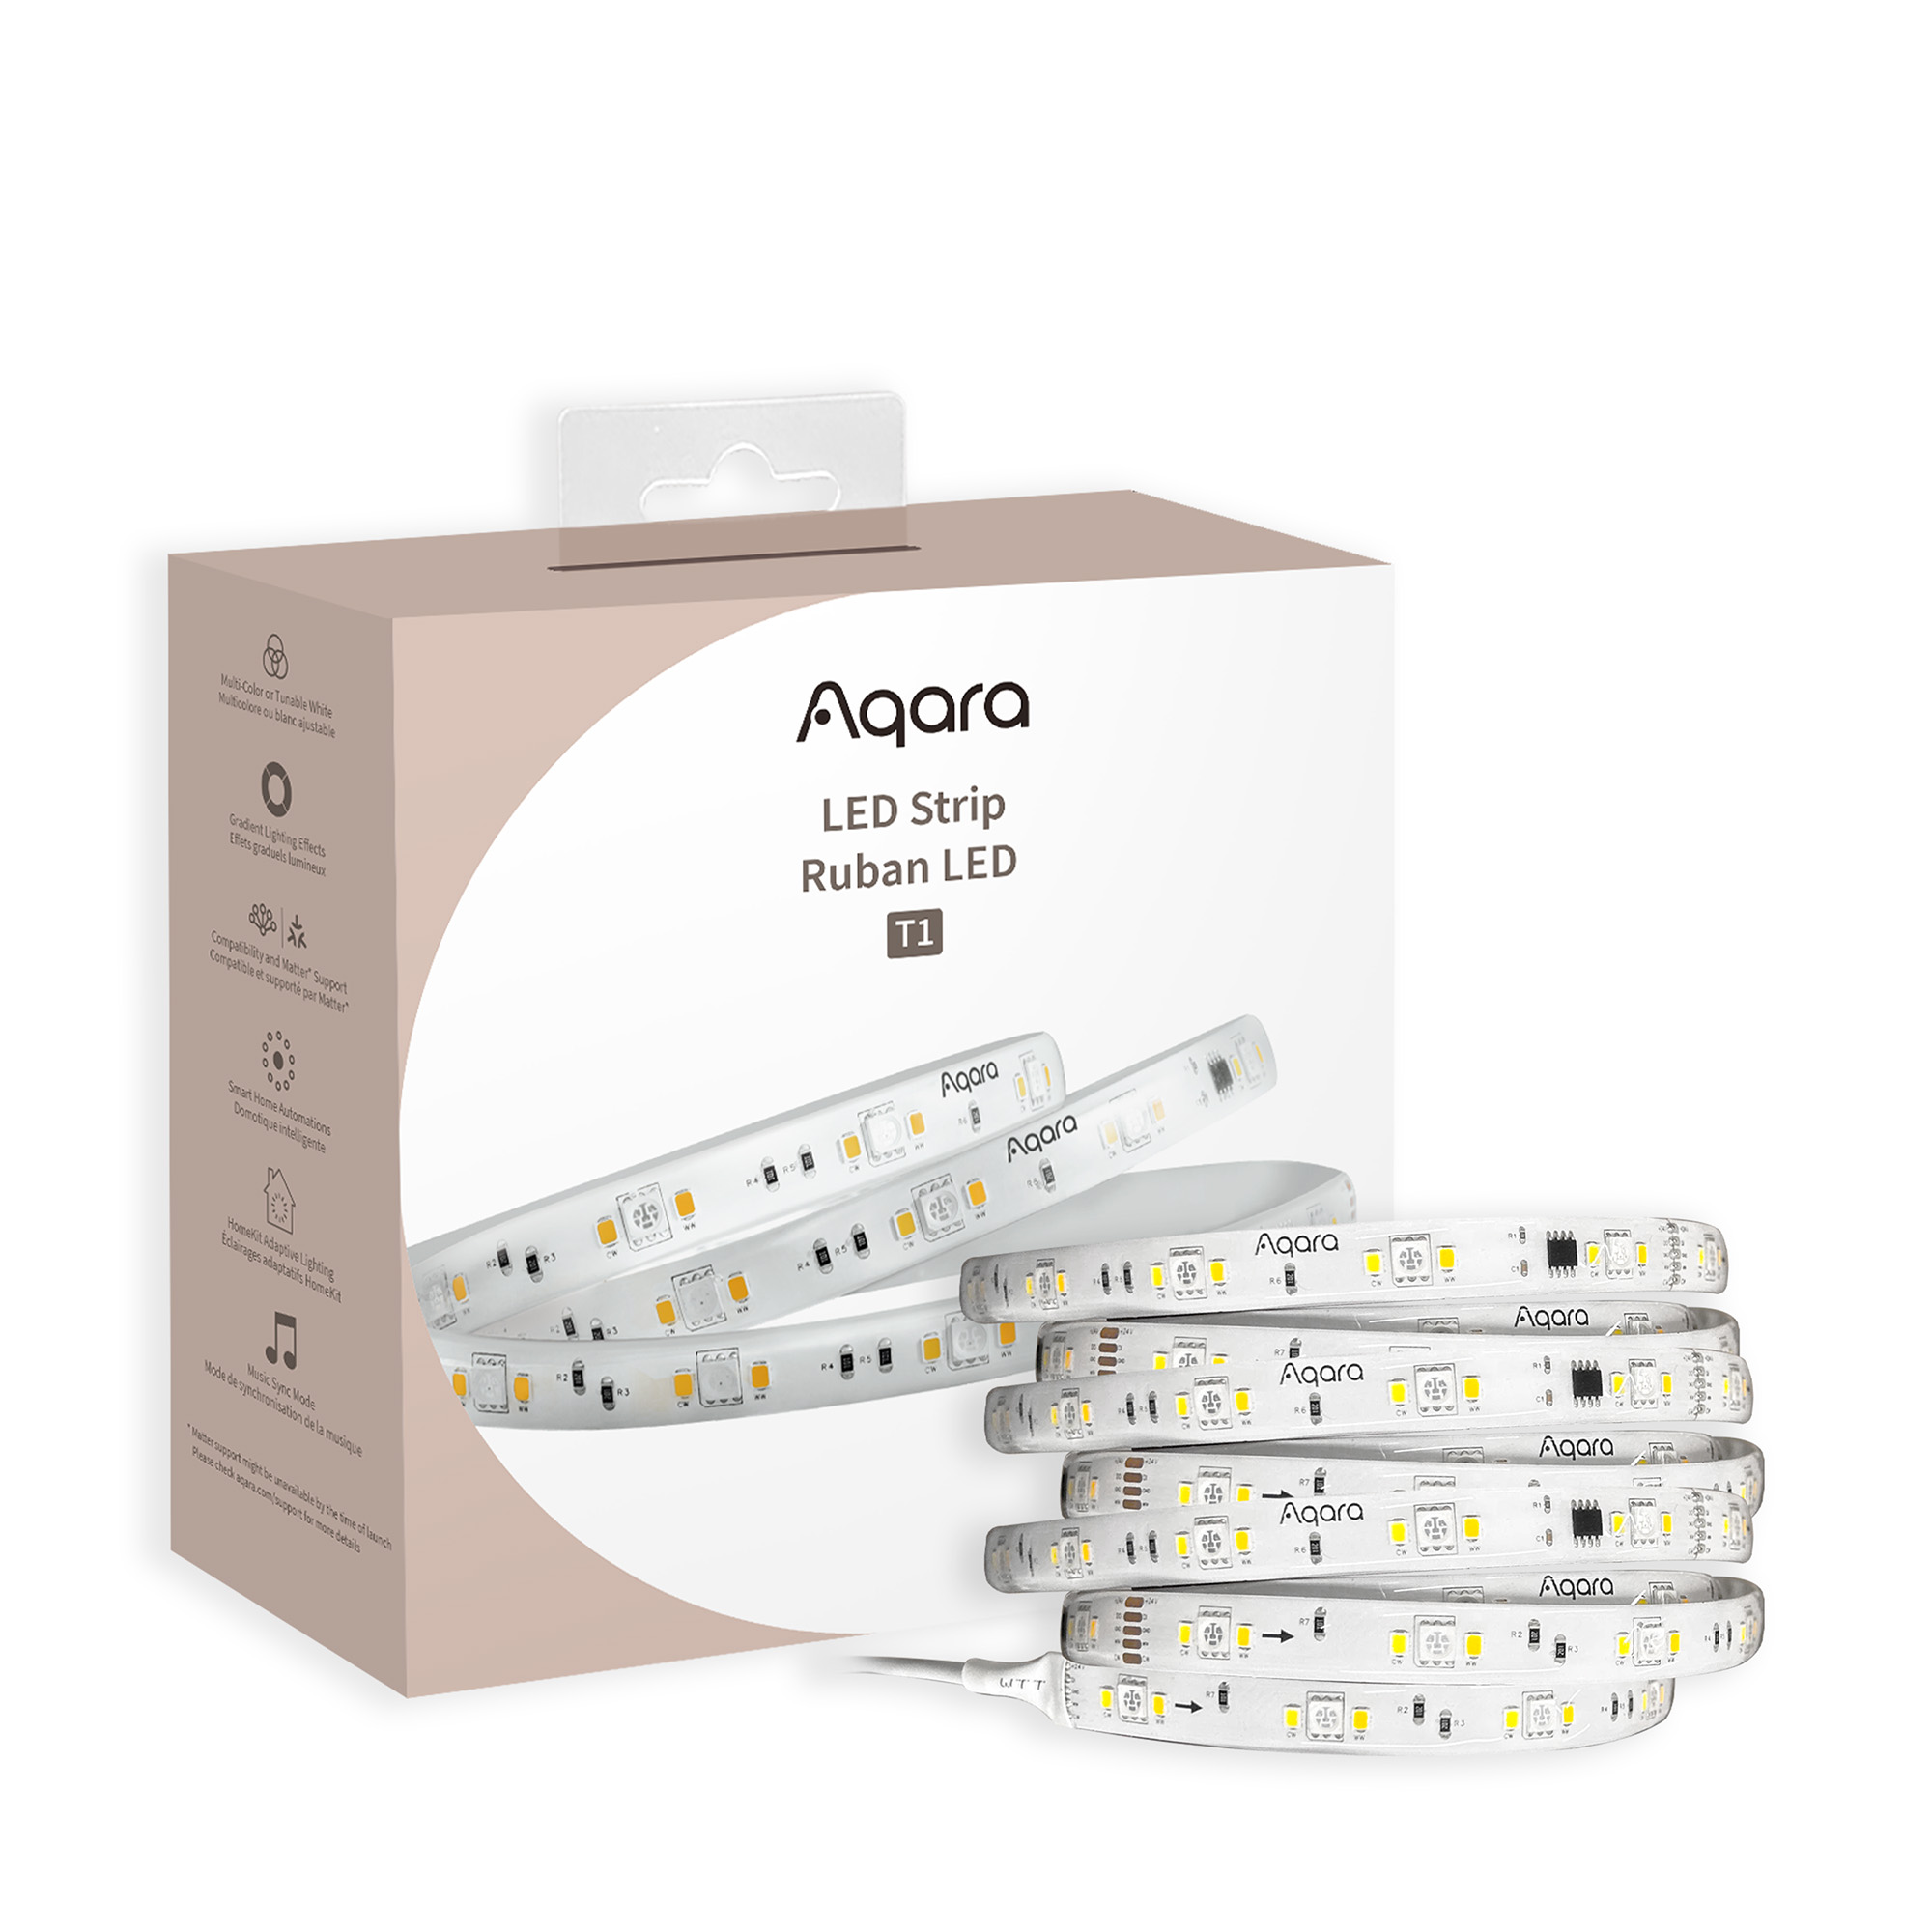 Aqara LED Strip T1 - Aqara UK Shop